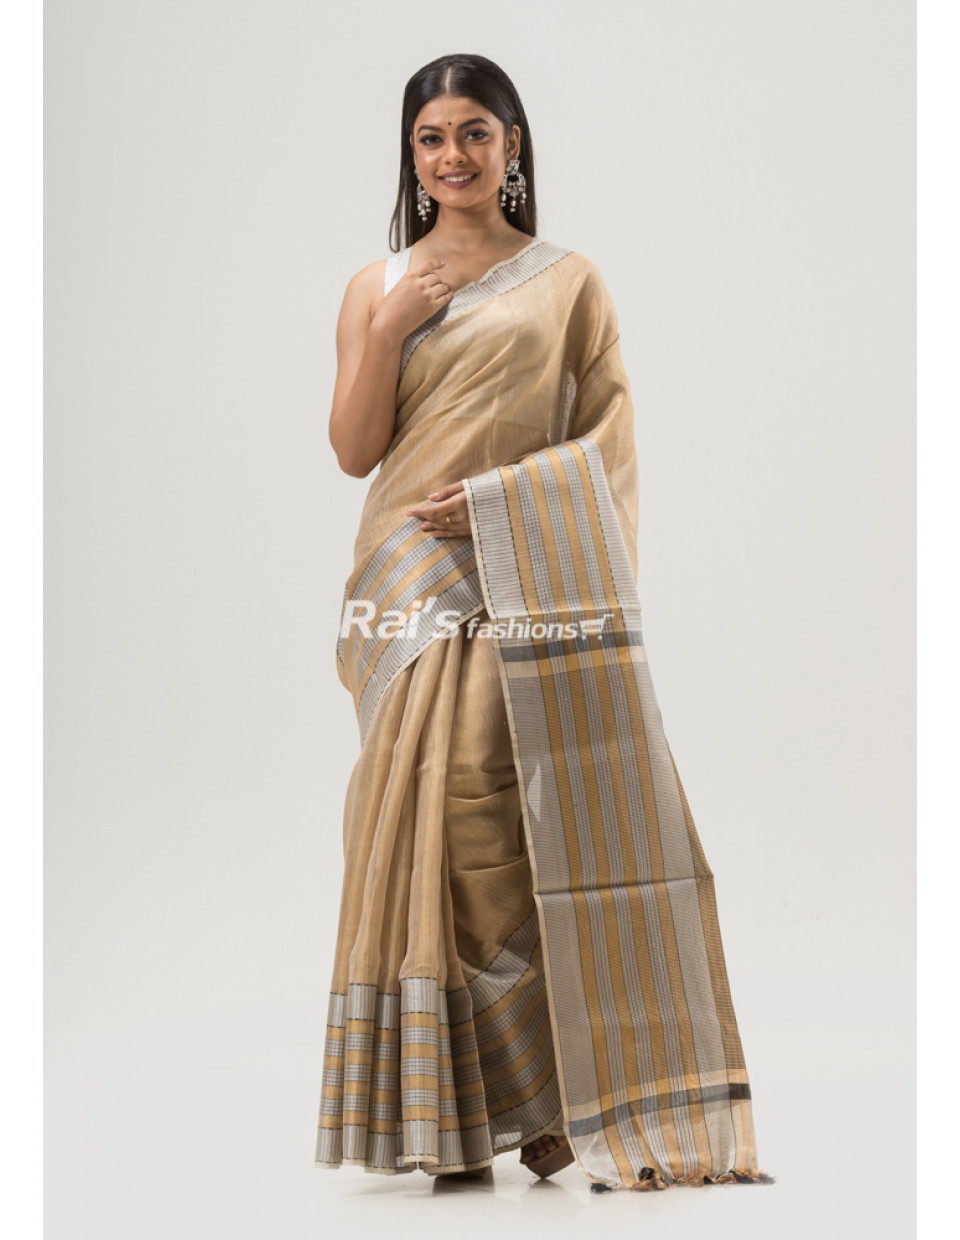 Self Weaving Strips Pattern Tissue Linen Saree (KR1645)